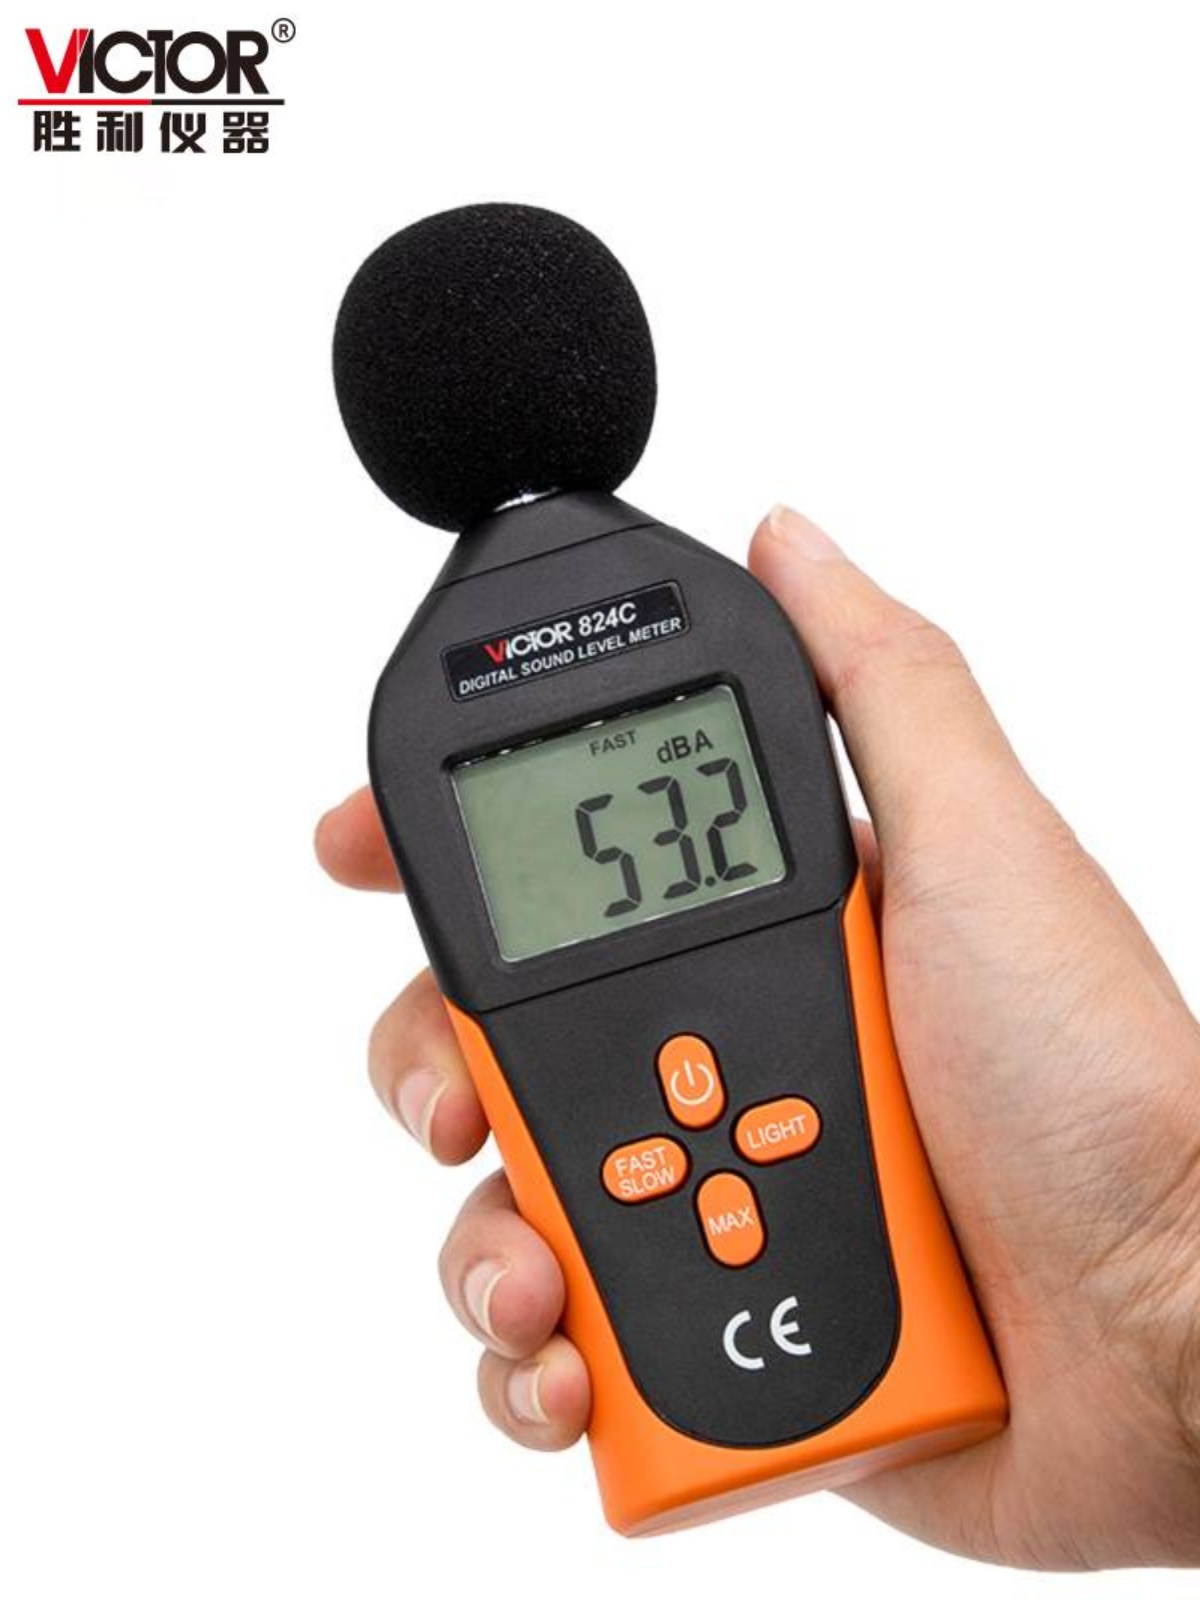 VC824C噪音计手持分贝检测仪器声音声级计家用音量噪声测试仪